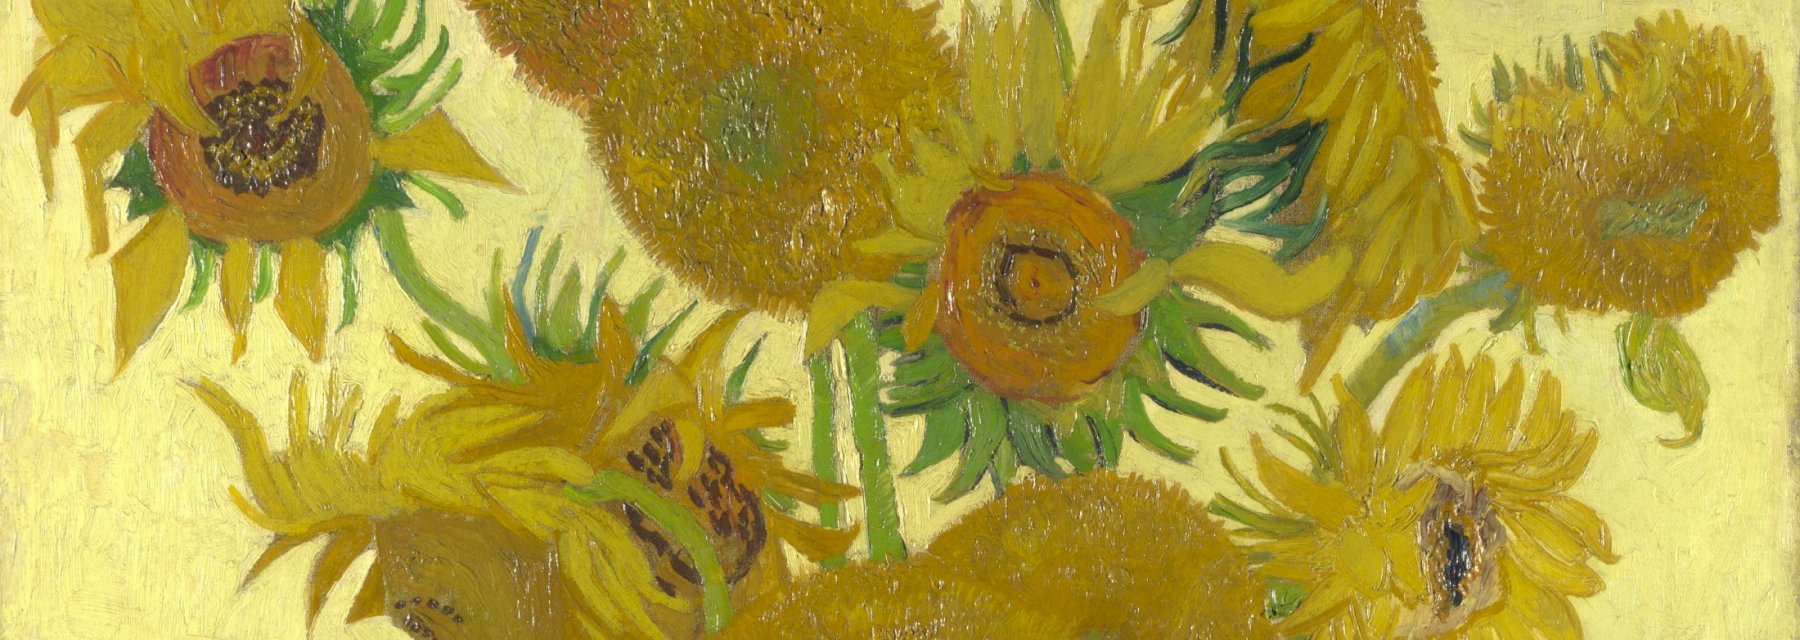 Vincent van Gogh: His most famous paintings